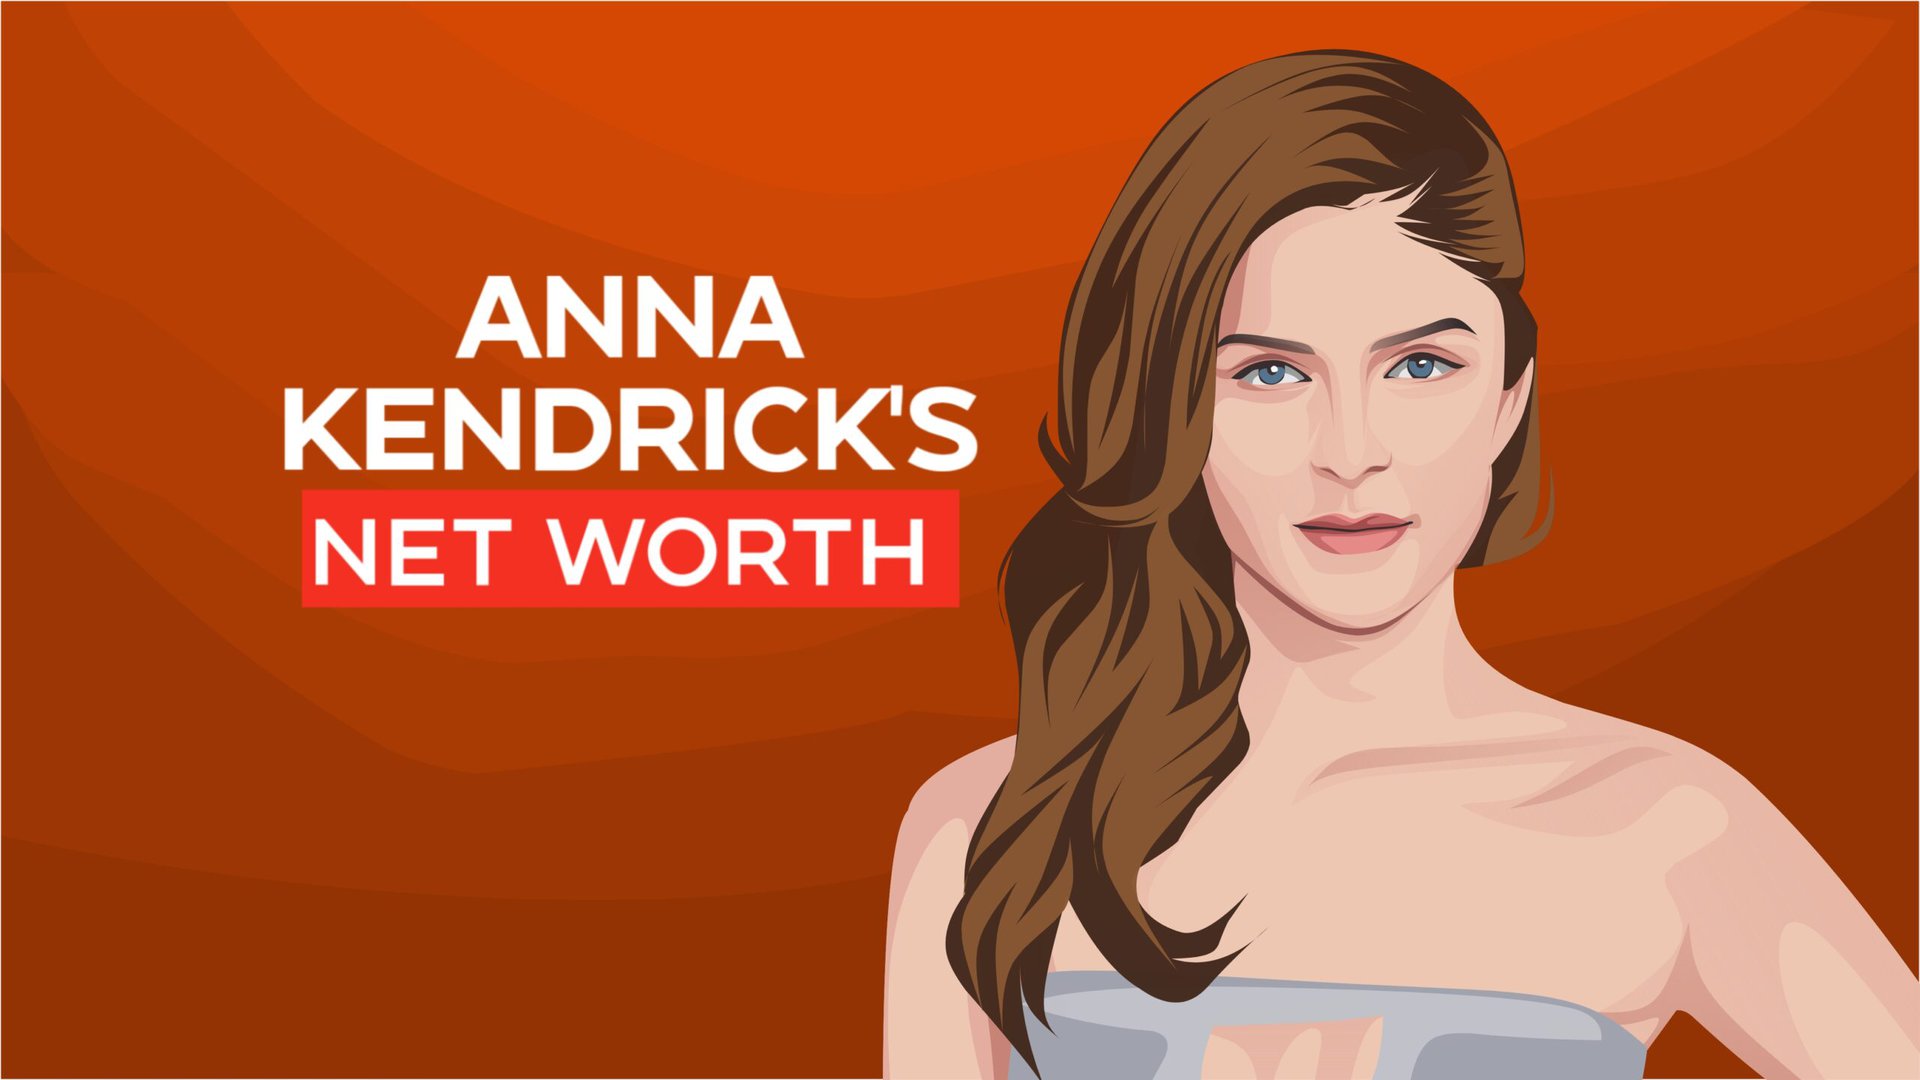 Anna Kendrick's net worth